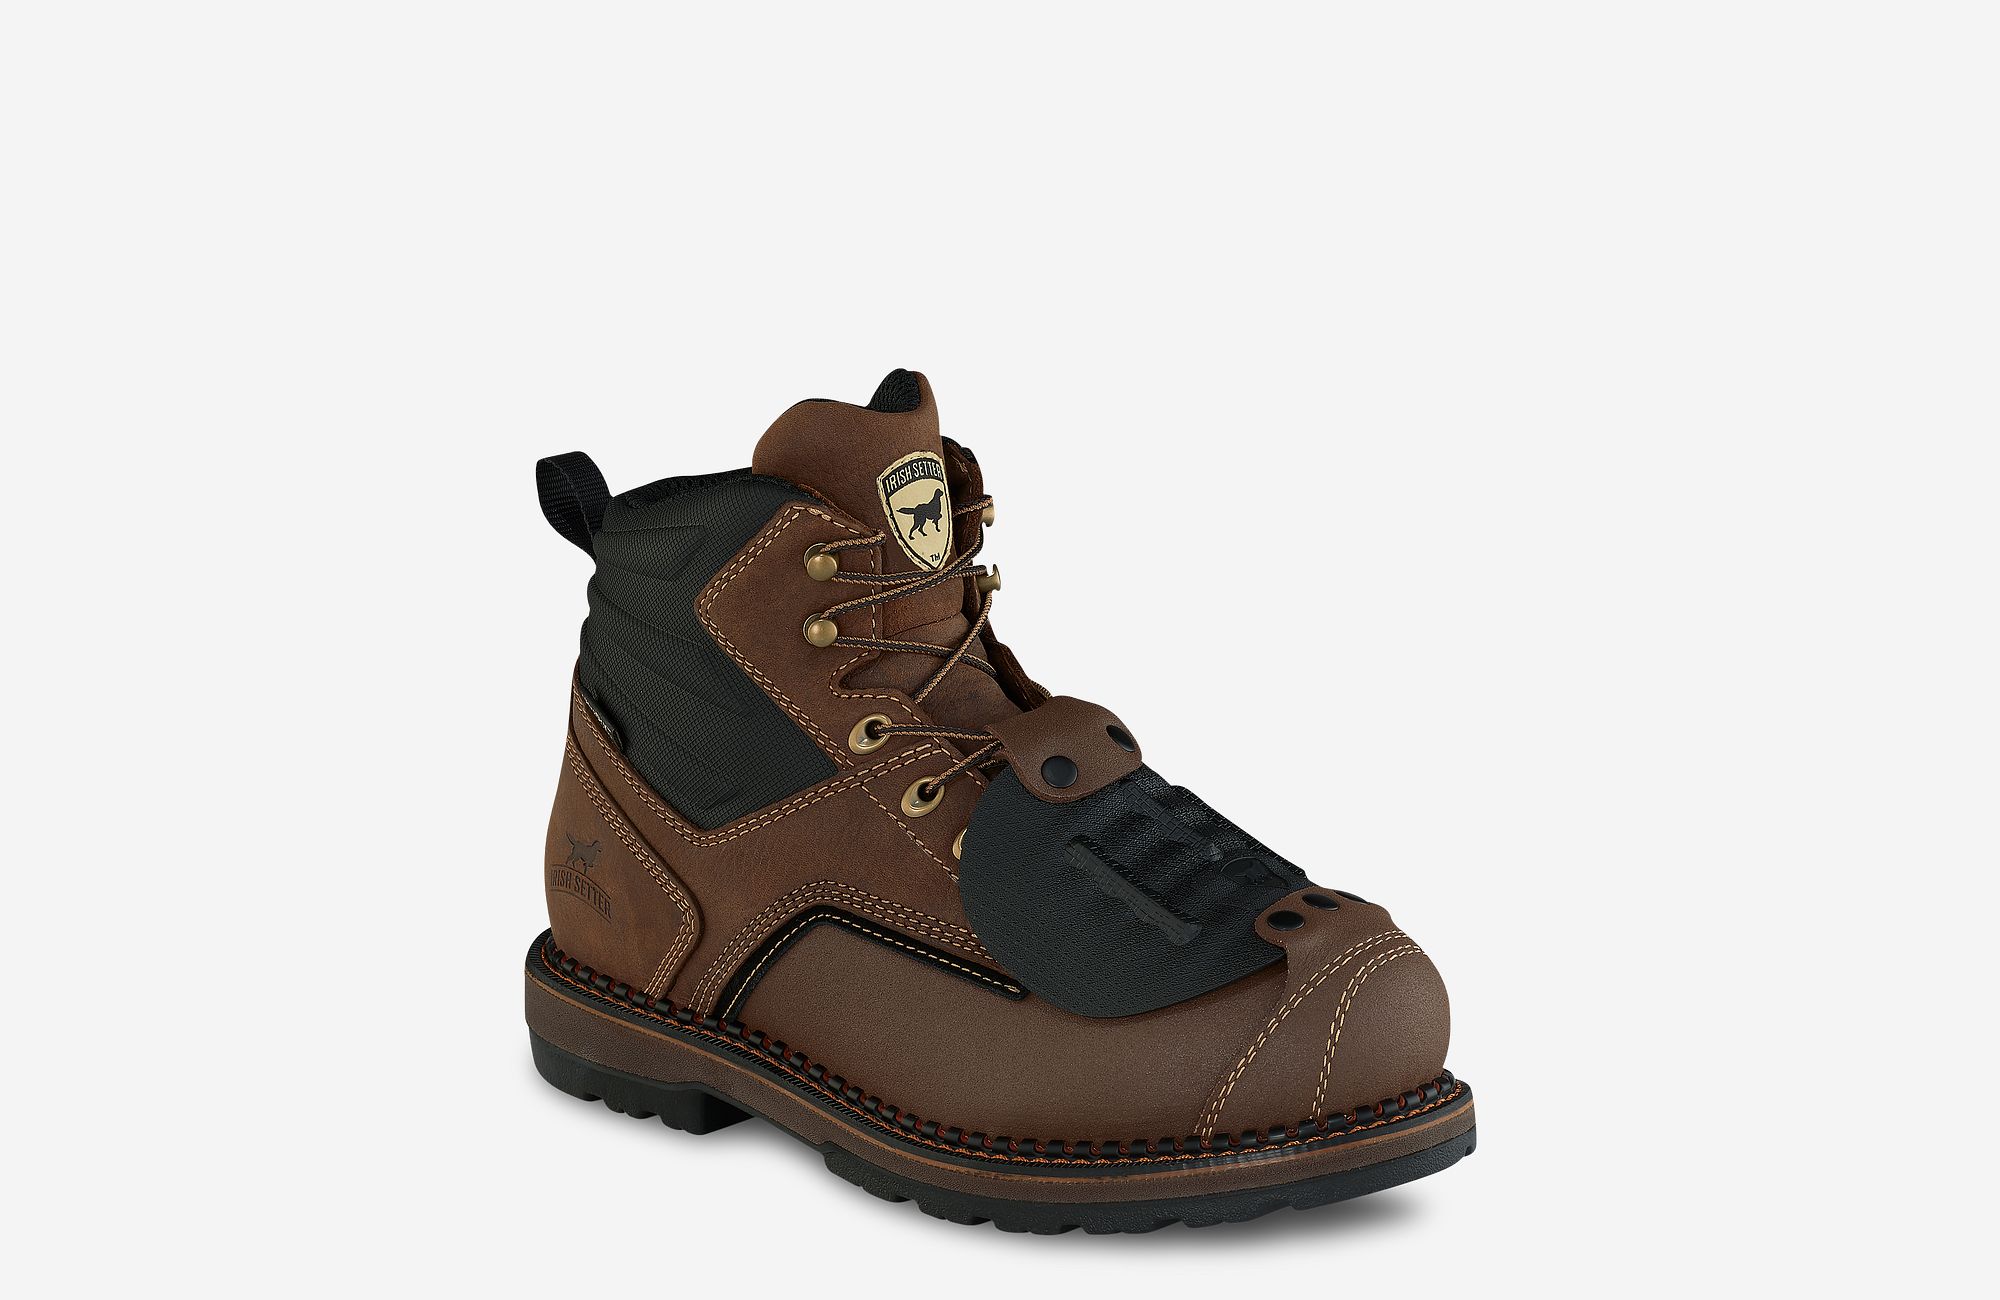 Mens Work Safety Welder Slip On Steel Toe Shoes Hiking Walking Welding Boots Hot